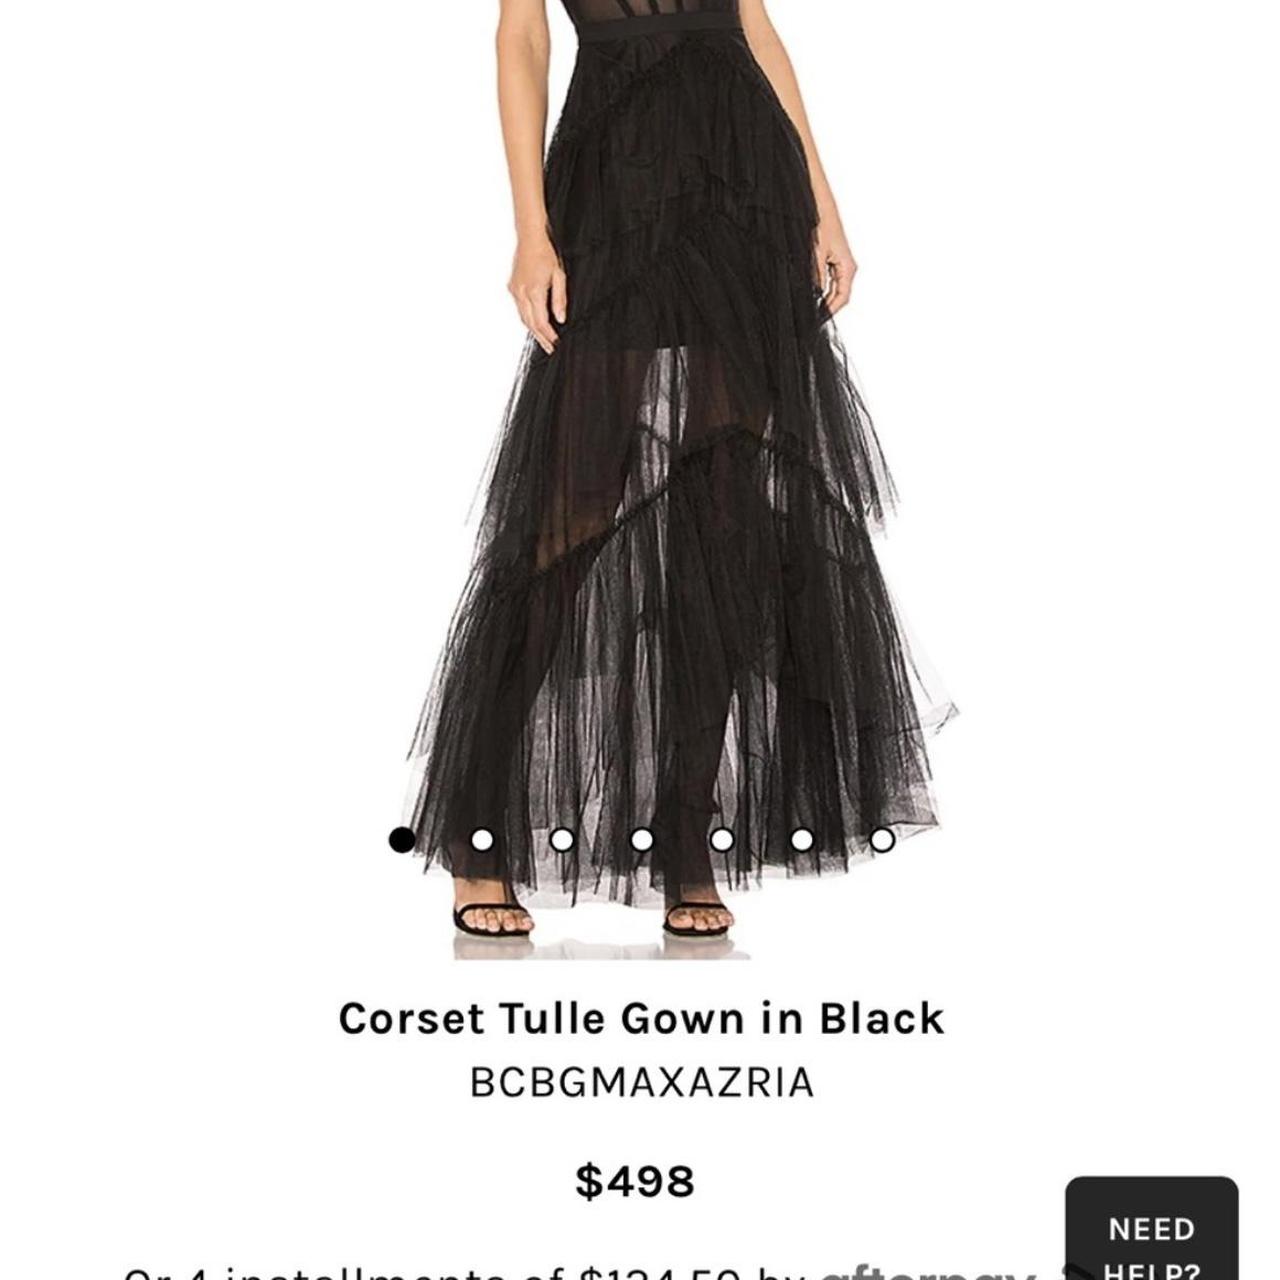 BCBGMAXAZRIA Corset Tulle Gown in Black